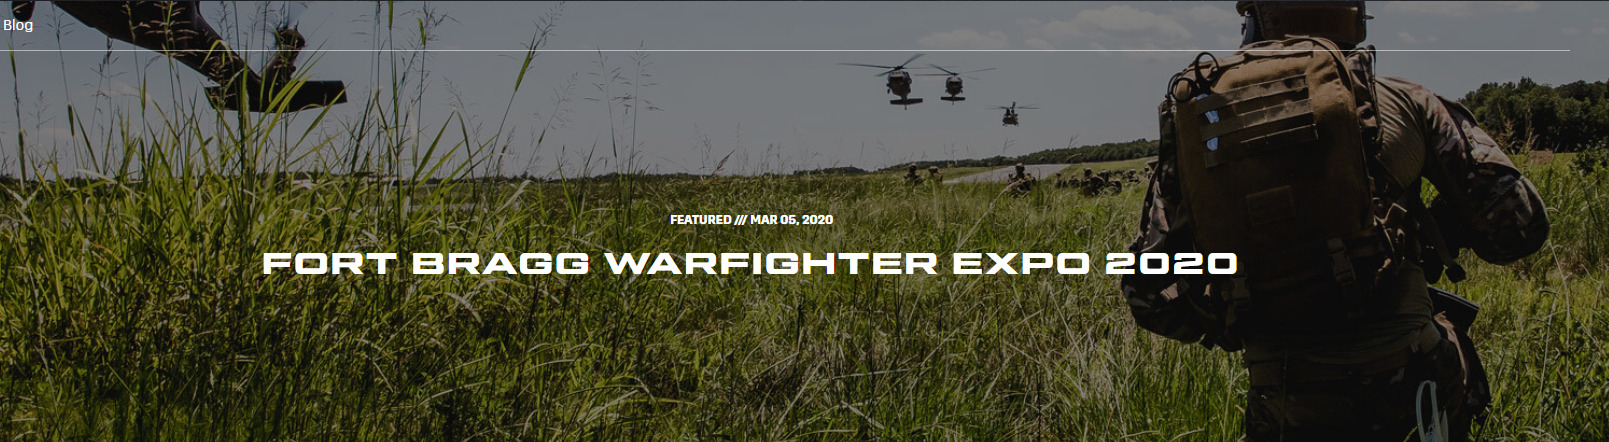 Fort Bragg Warfighter Expo 2020 banner